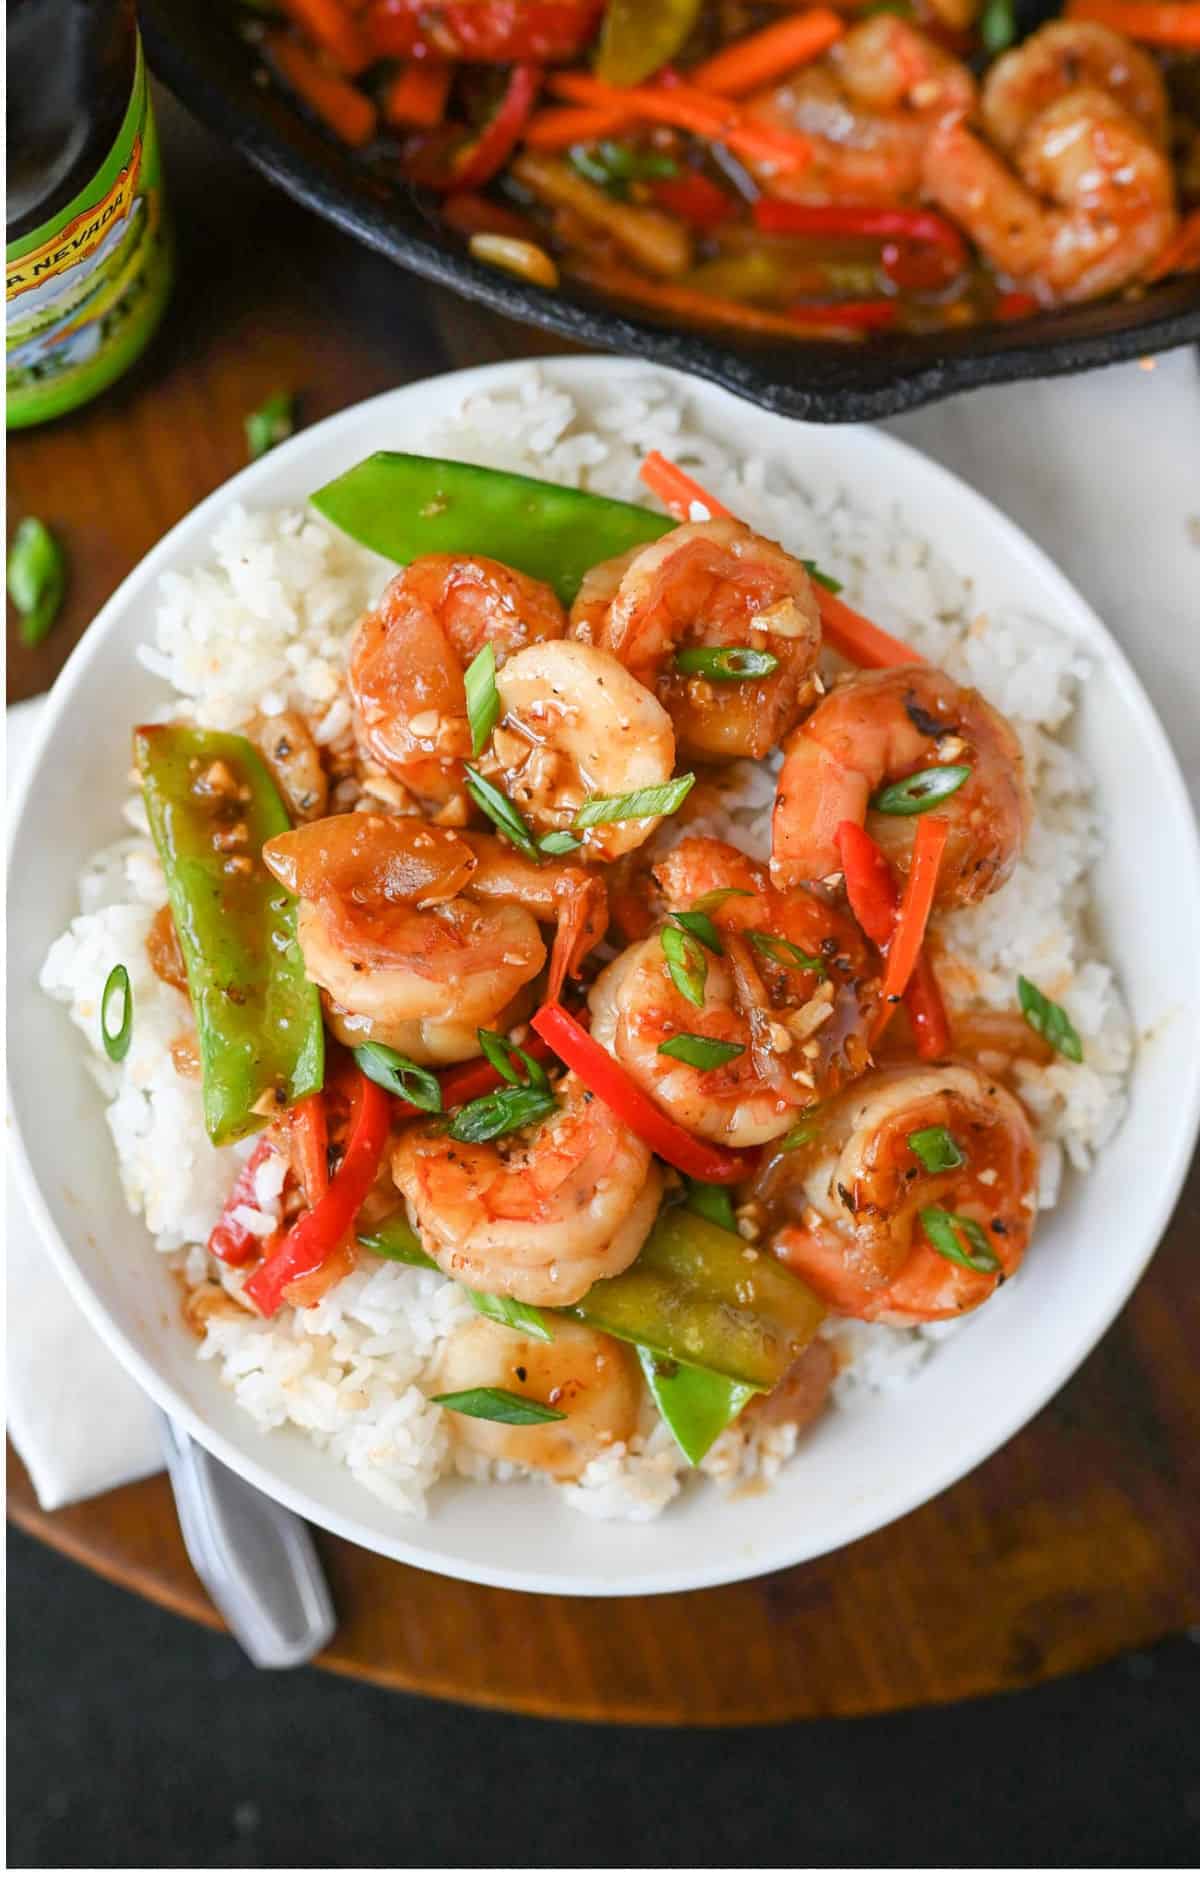 Shrimp and veggies over rice.